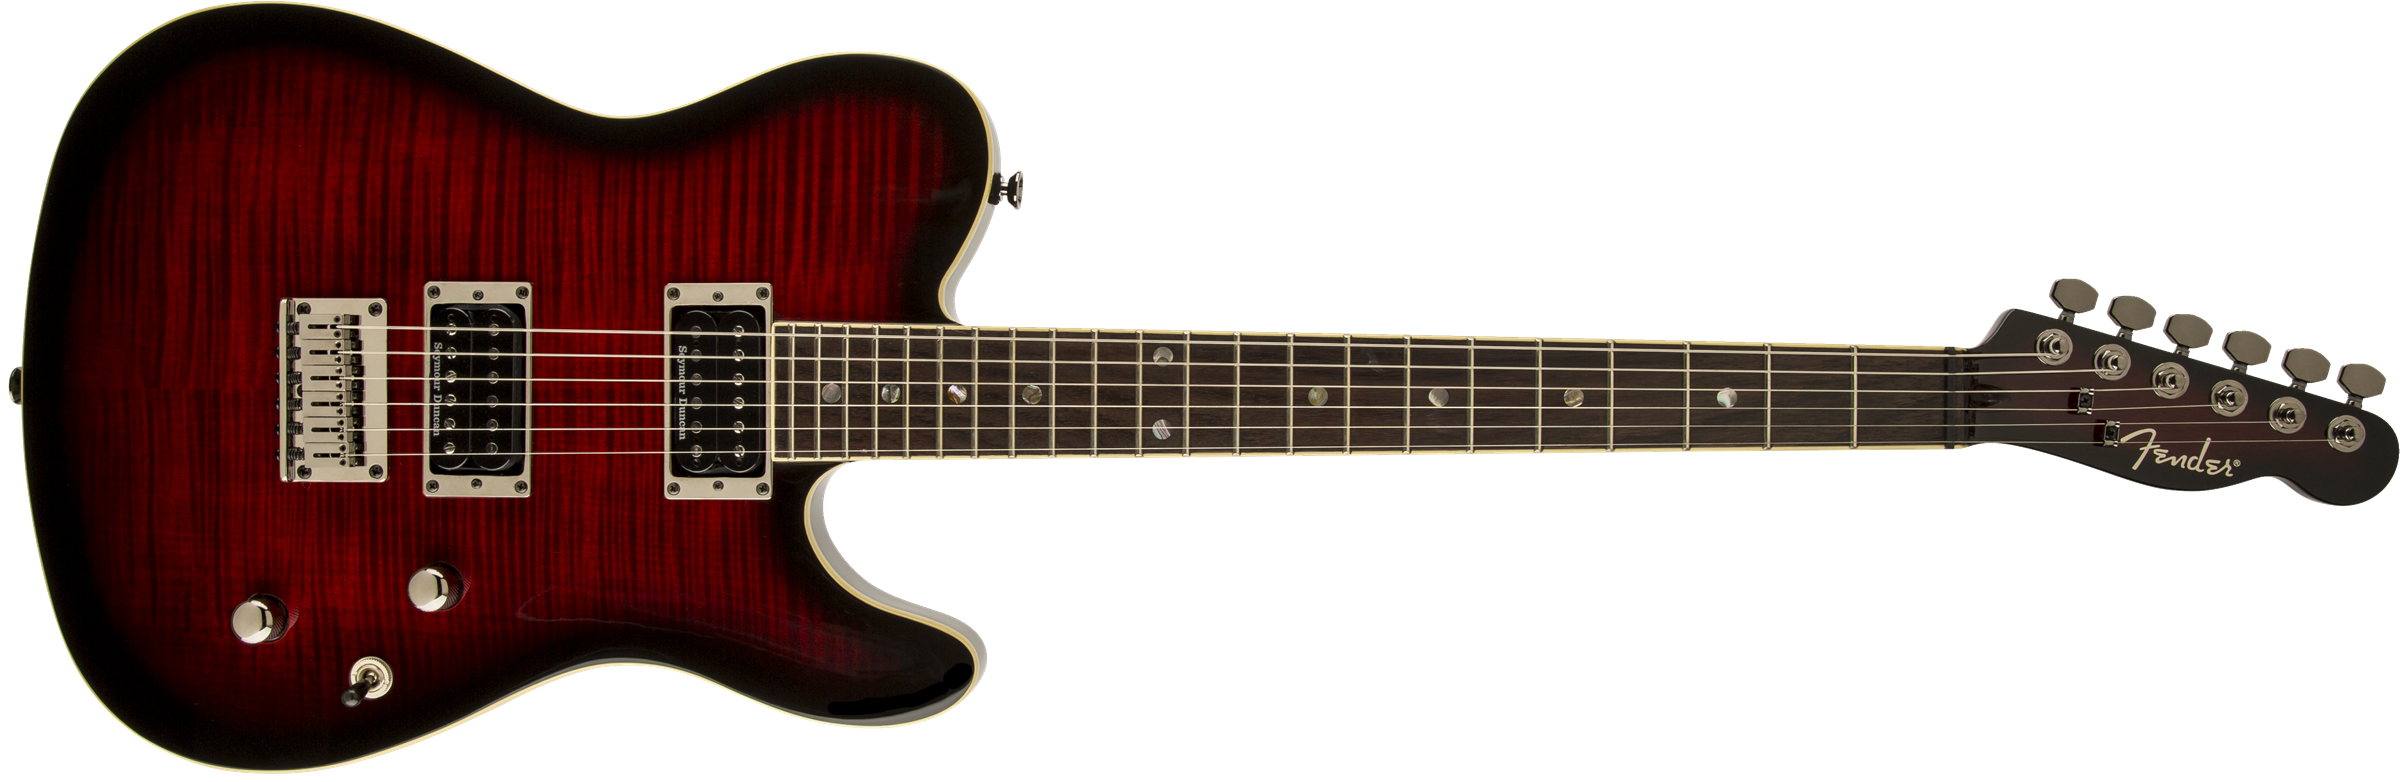 Fender Telecaster Korean Special Edition Custom Fmt (lau) - Black Cherry Burst - E-Gitarre in Teleform - Variation 1